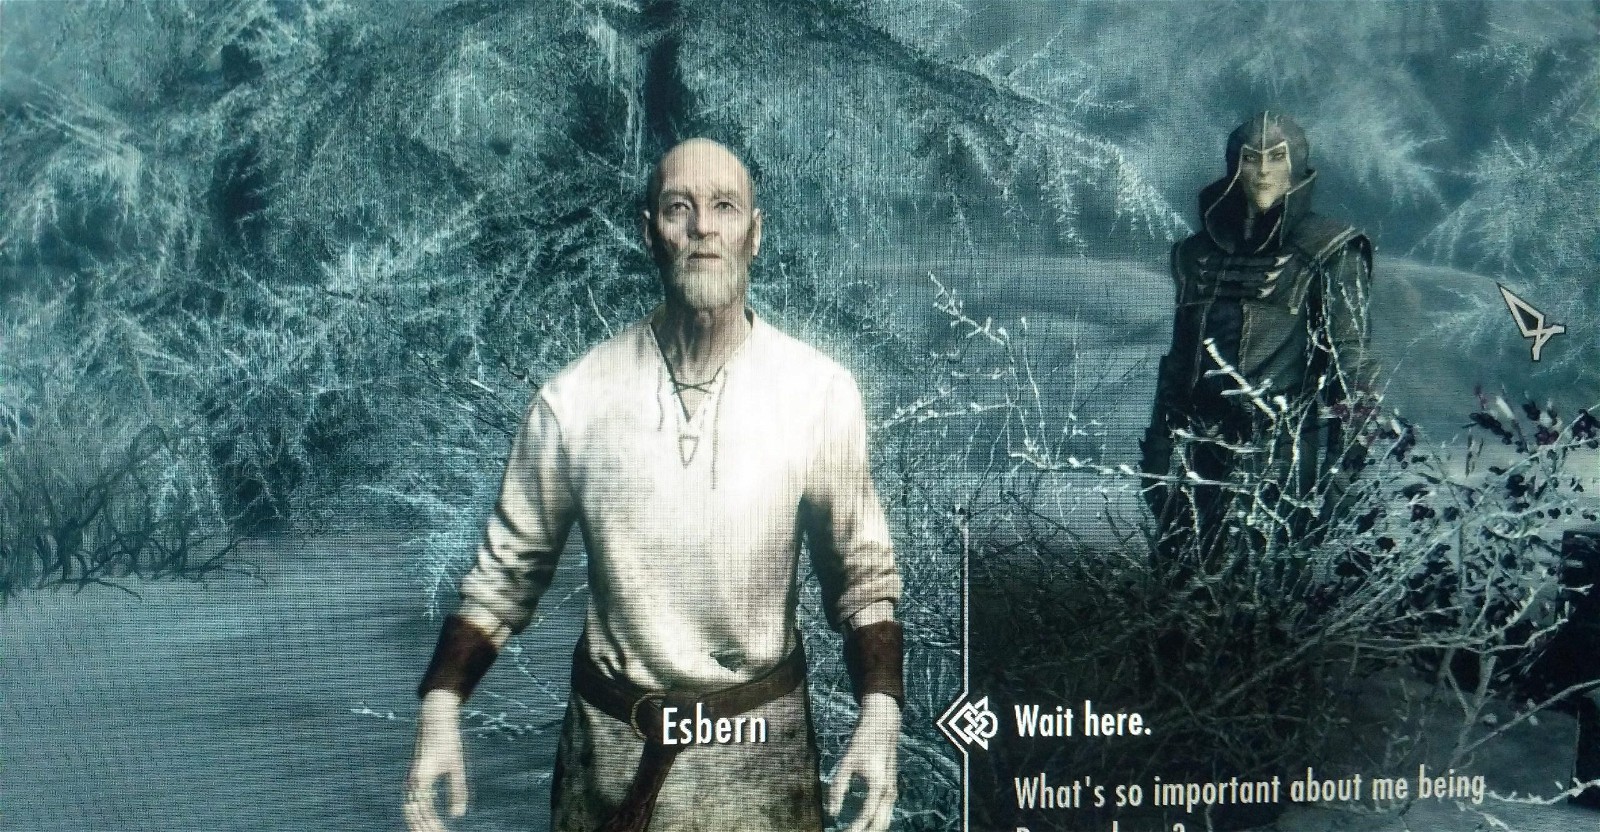 Max von Sydow's character, Esbern, in The Elder Scrolls V: Skyrim